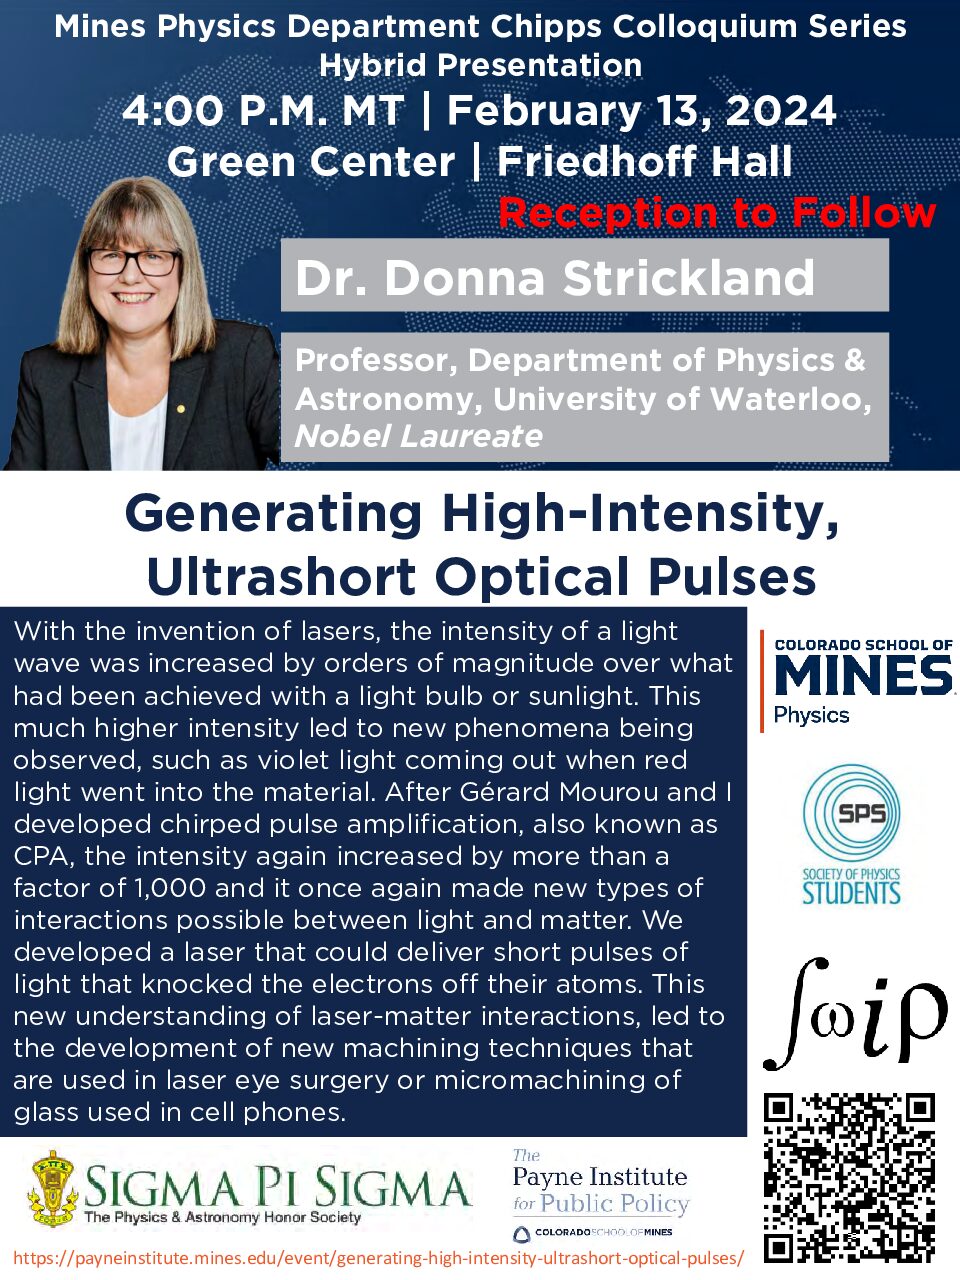 Generating High-Intensity Ultrashort Optical Pulses